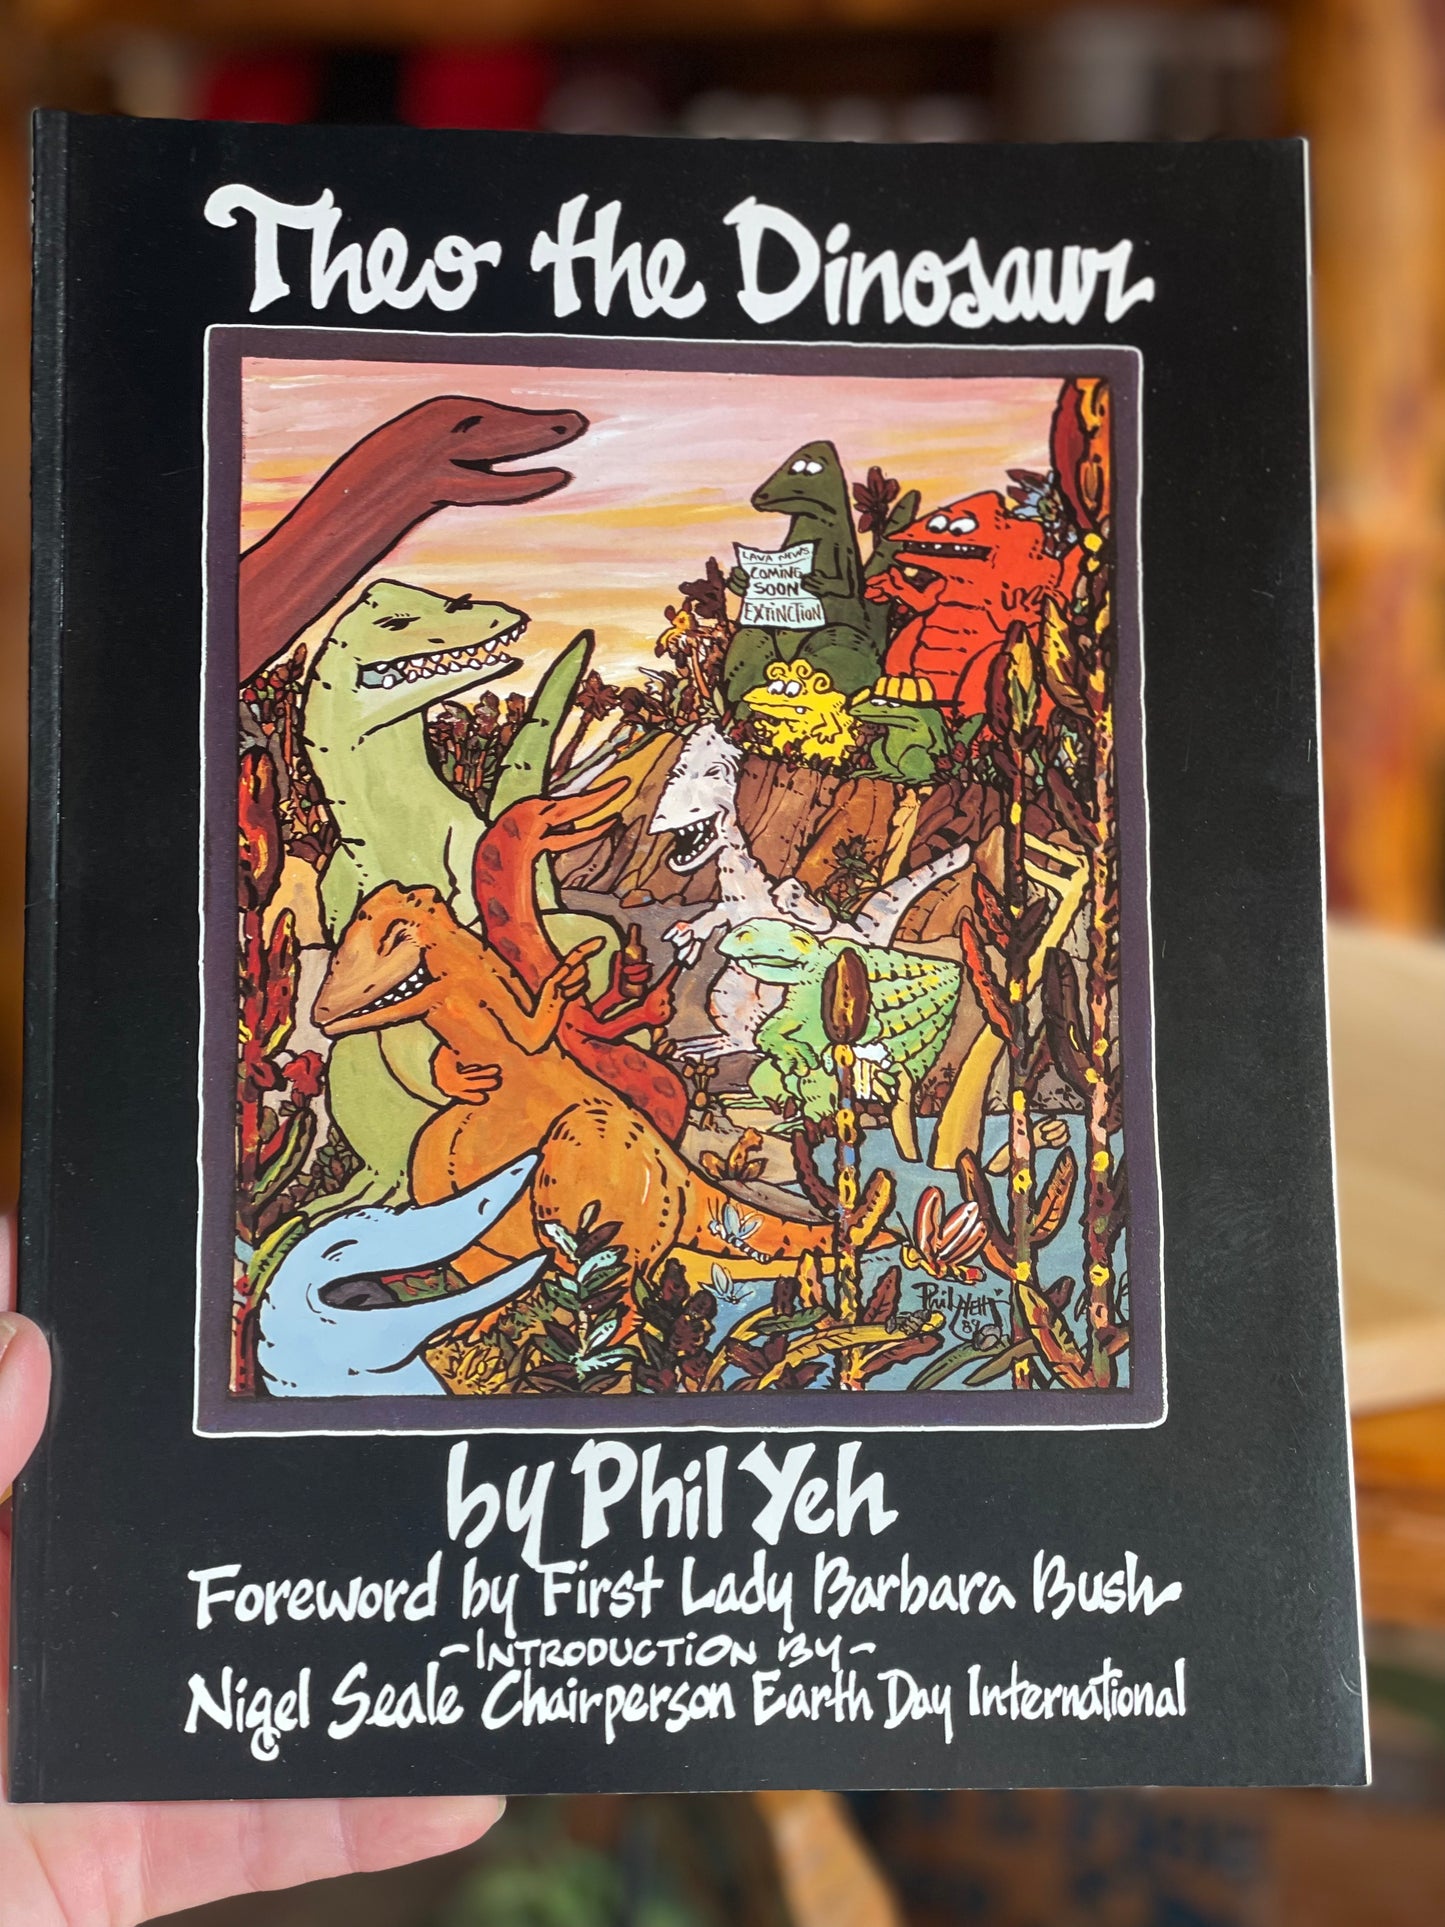 Theo the Dinosaur